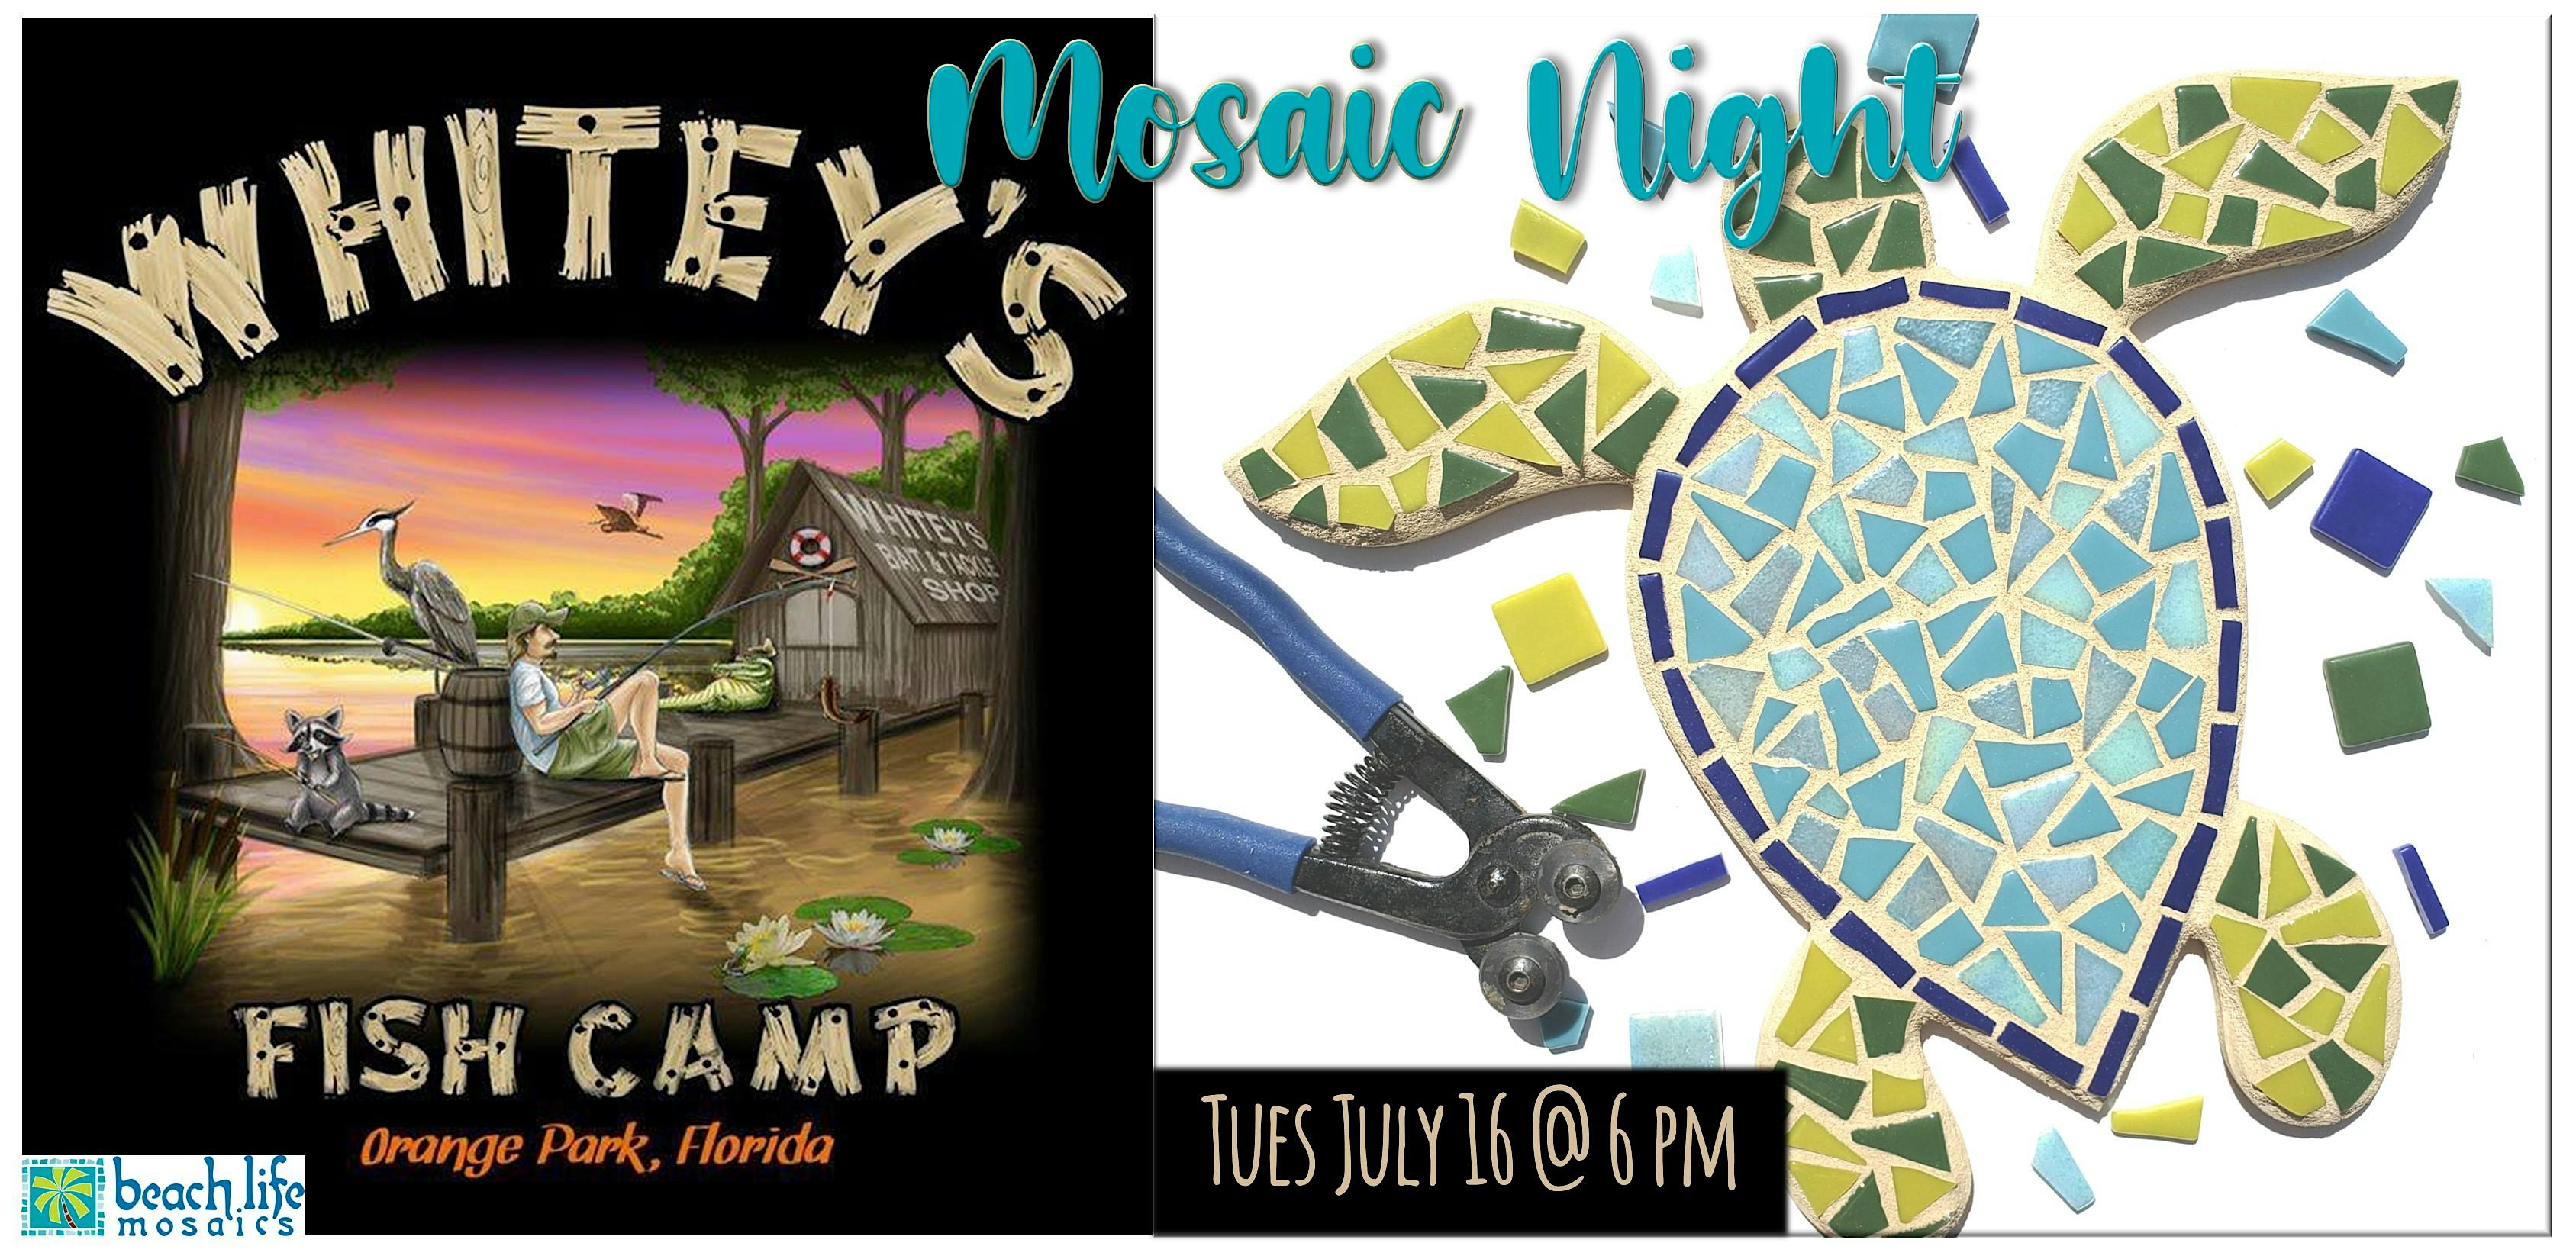 Mosaic Night at Whitey's Fish Camp